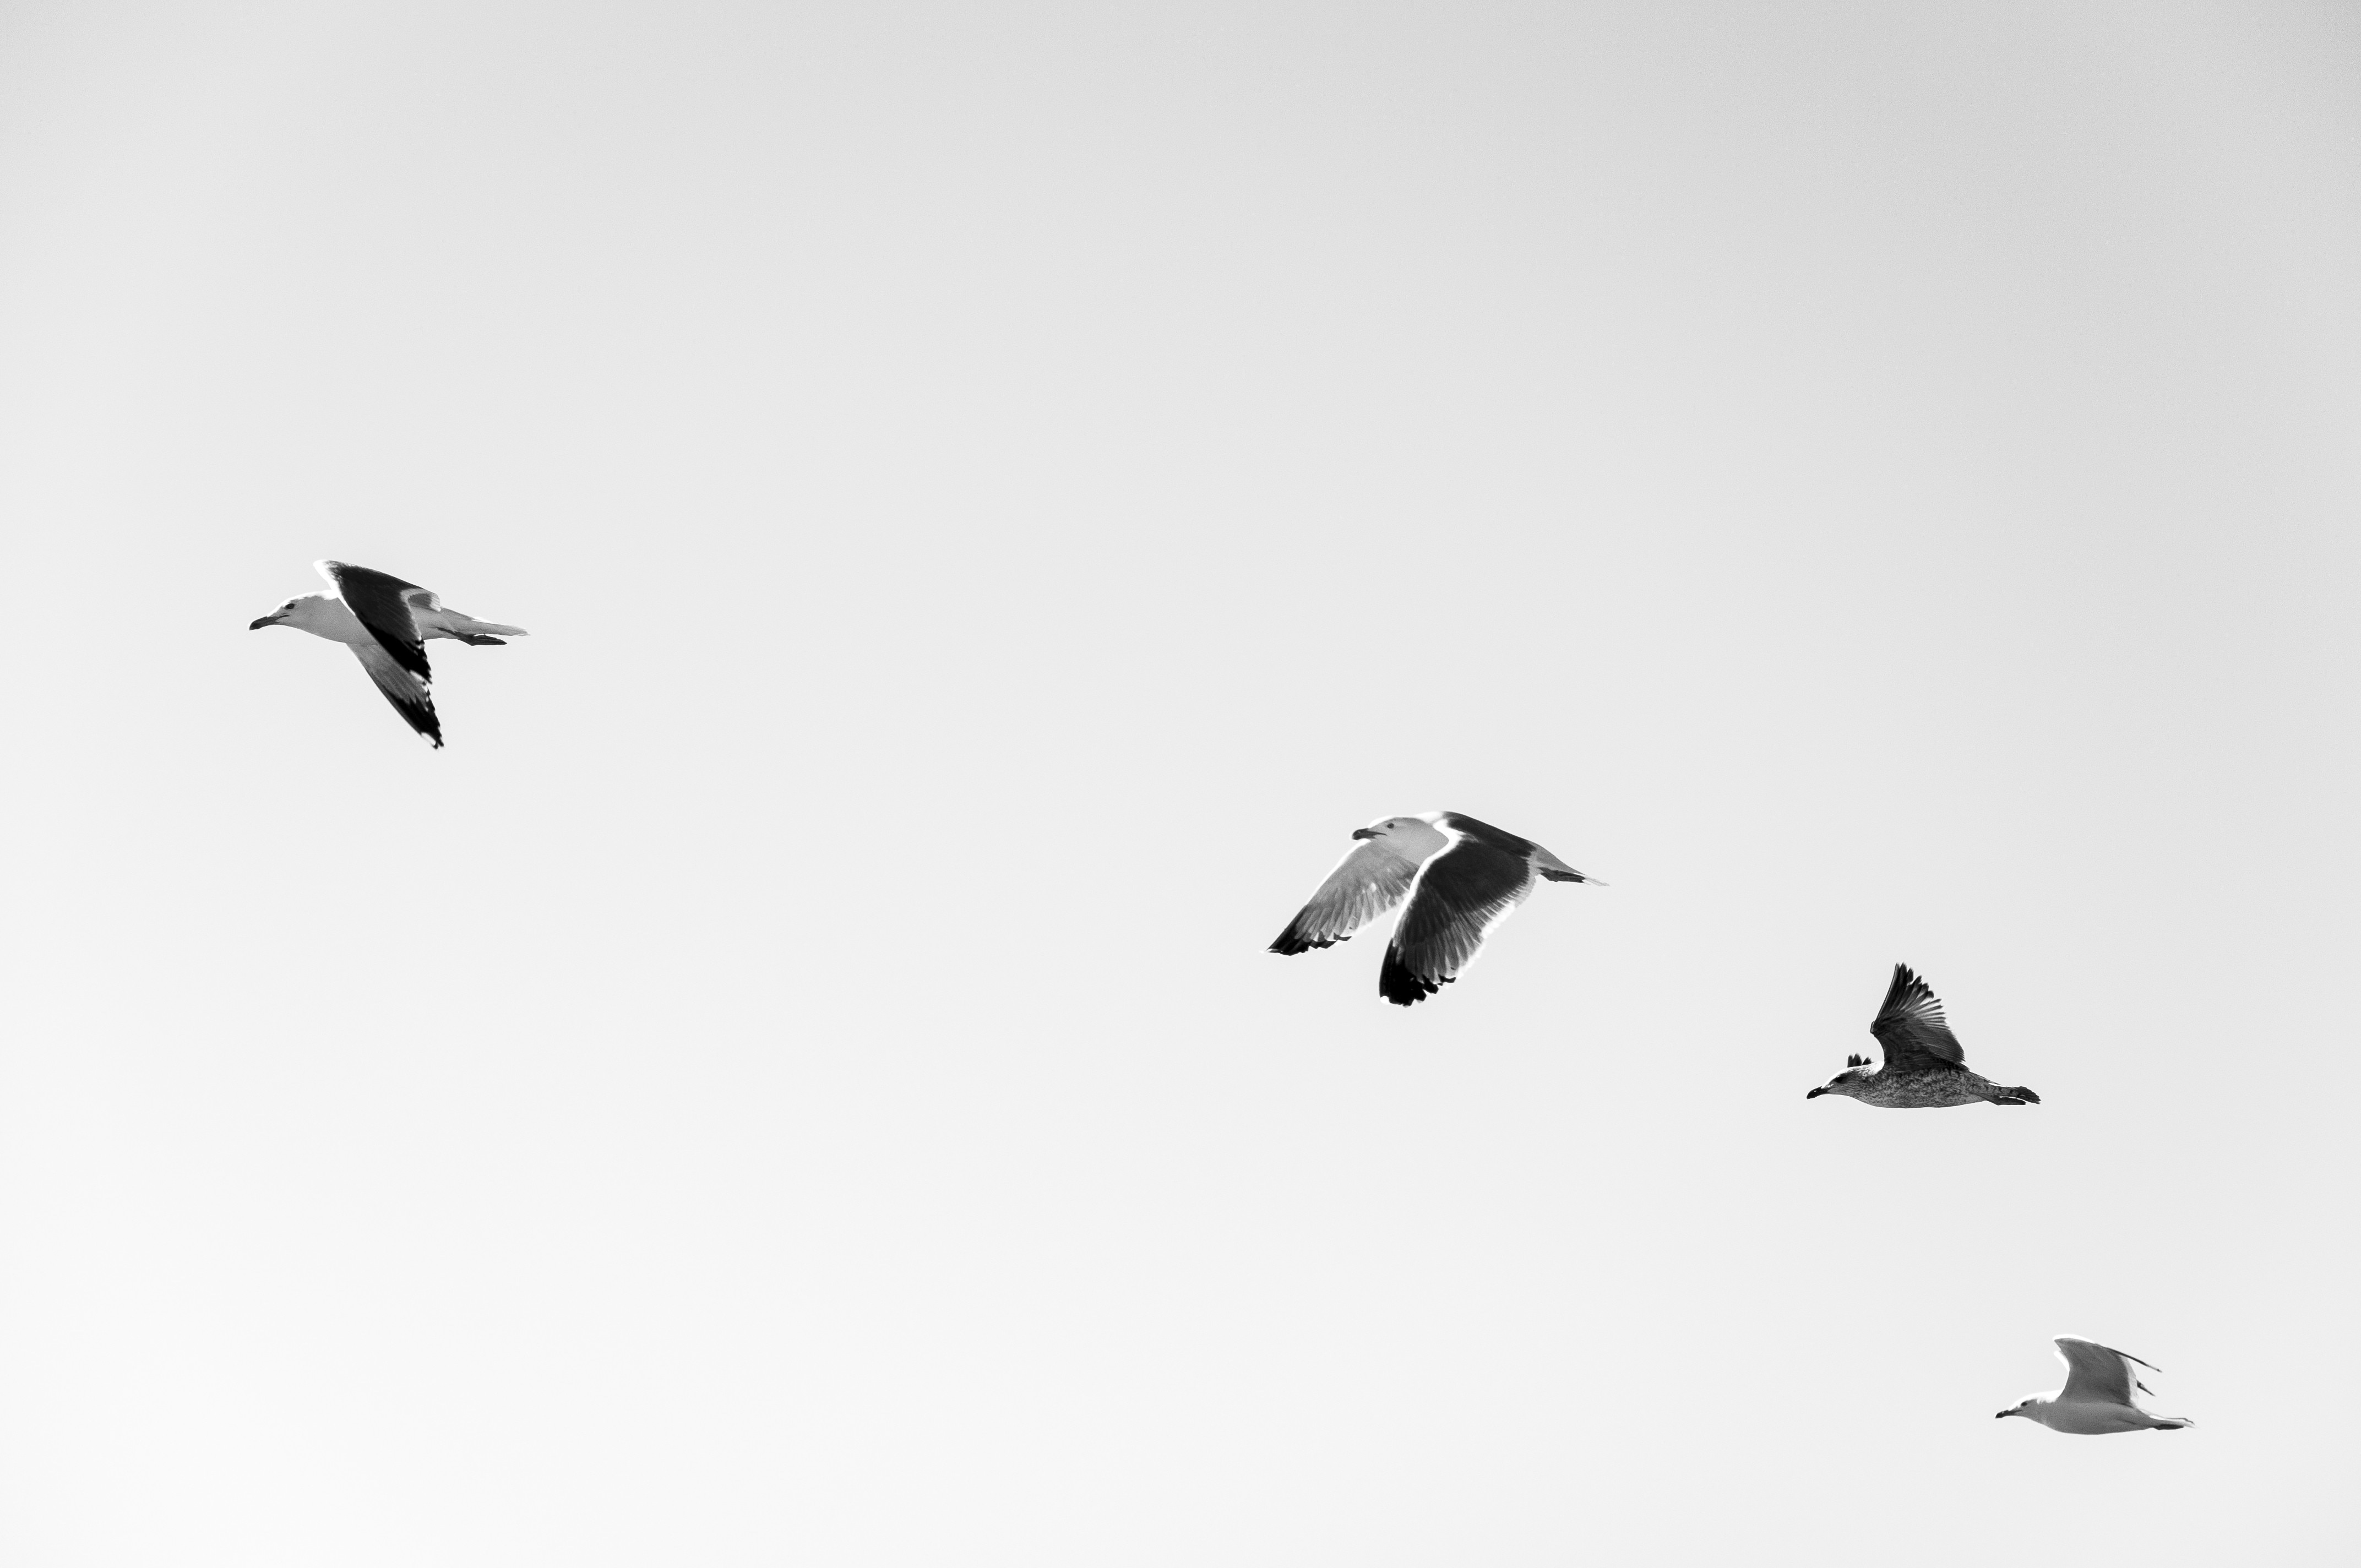 greyscale photo of 5 seagulls flying